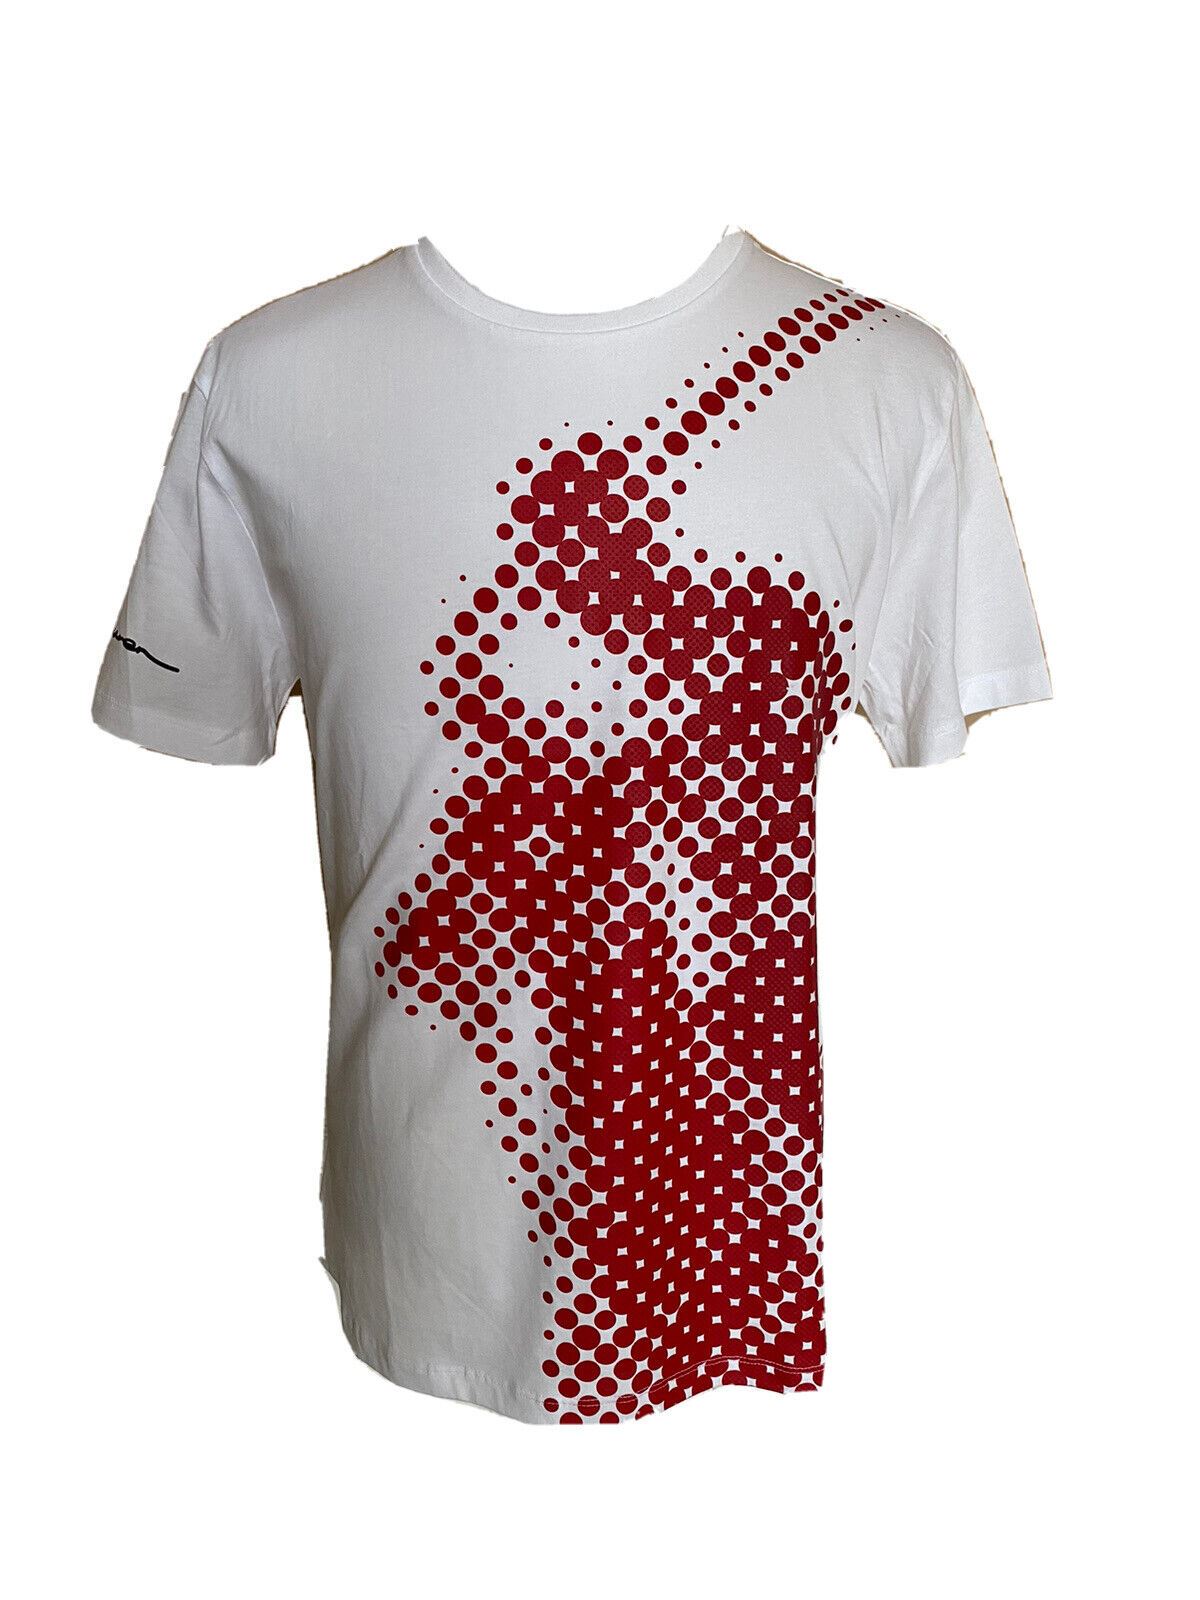 Neu mit Etikett: 65 $ Polo Ralph Lauren Kurzarm-Logo-T-Shirt Weiß Large 